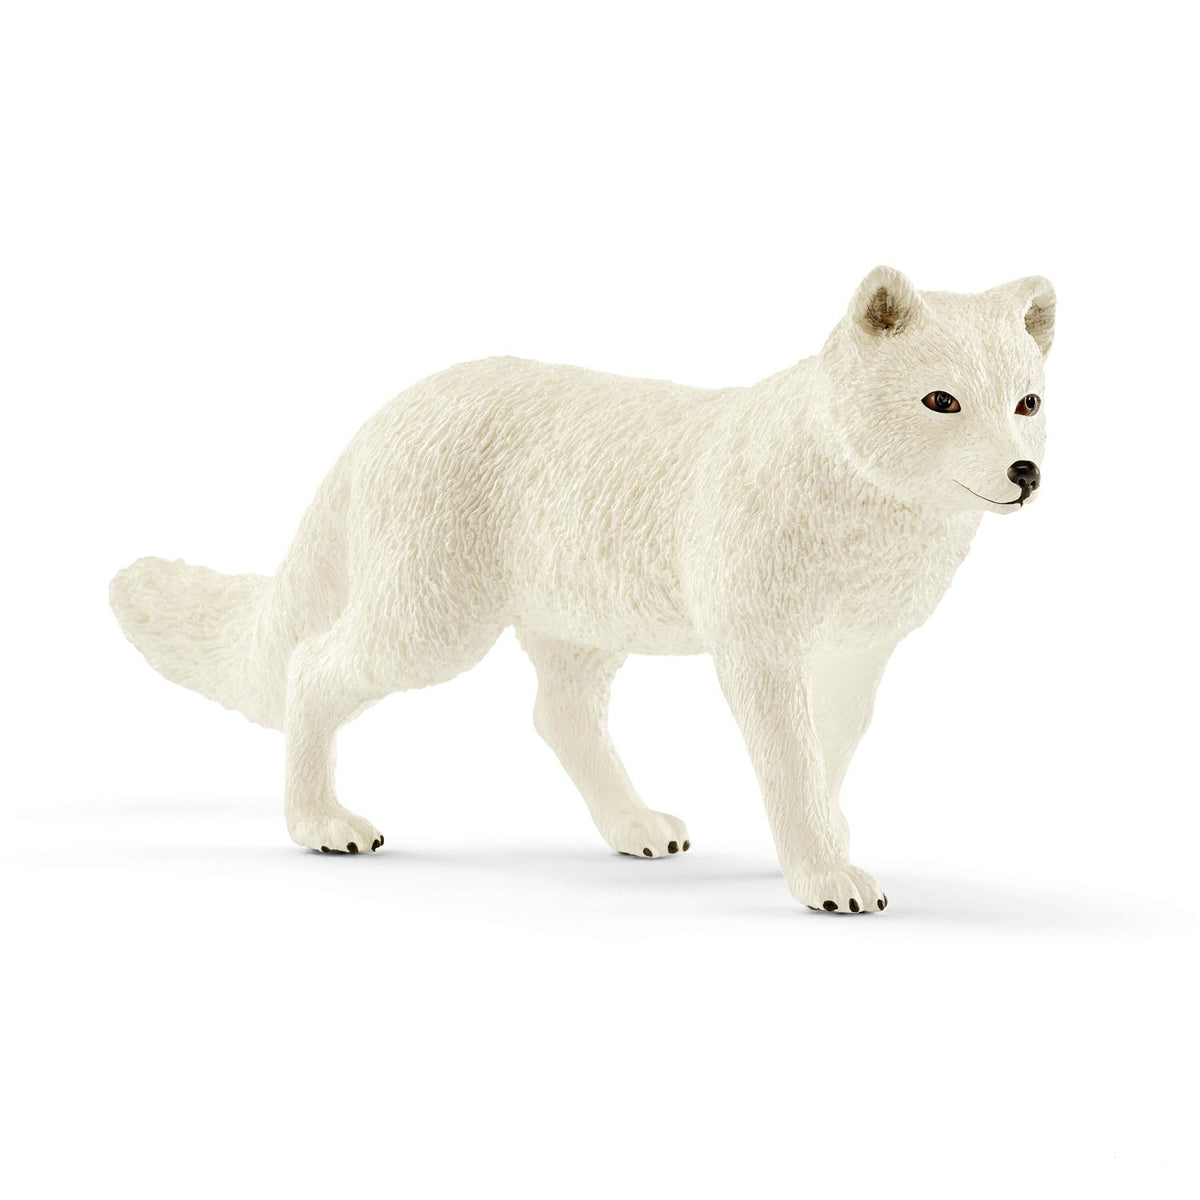 Schleich 14805 Figurine Arctic Wolf Cub Toy